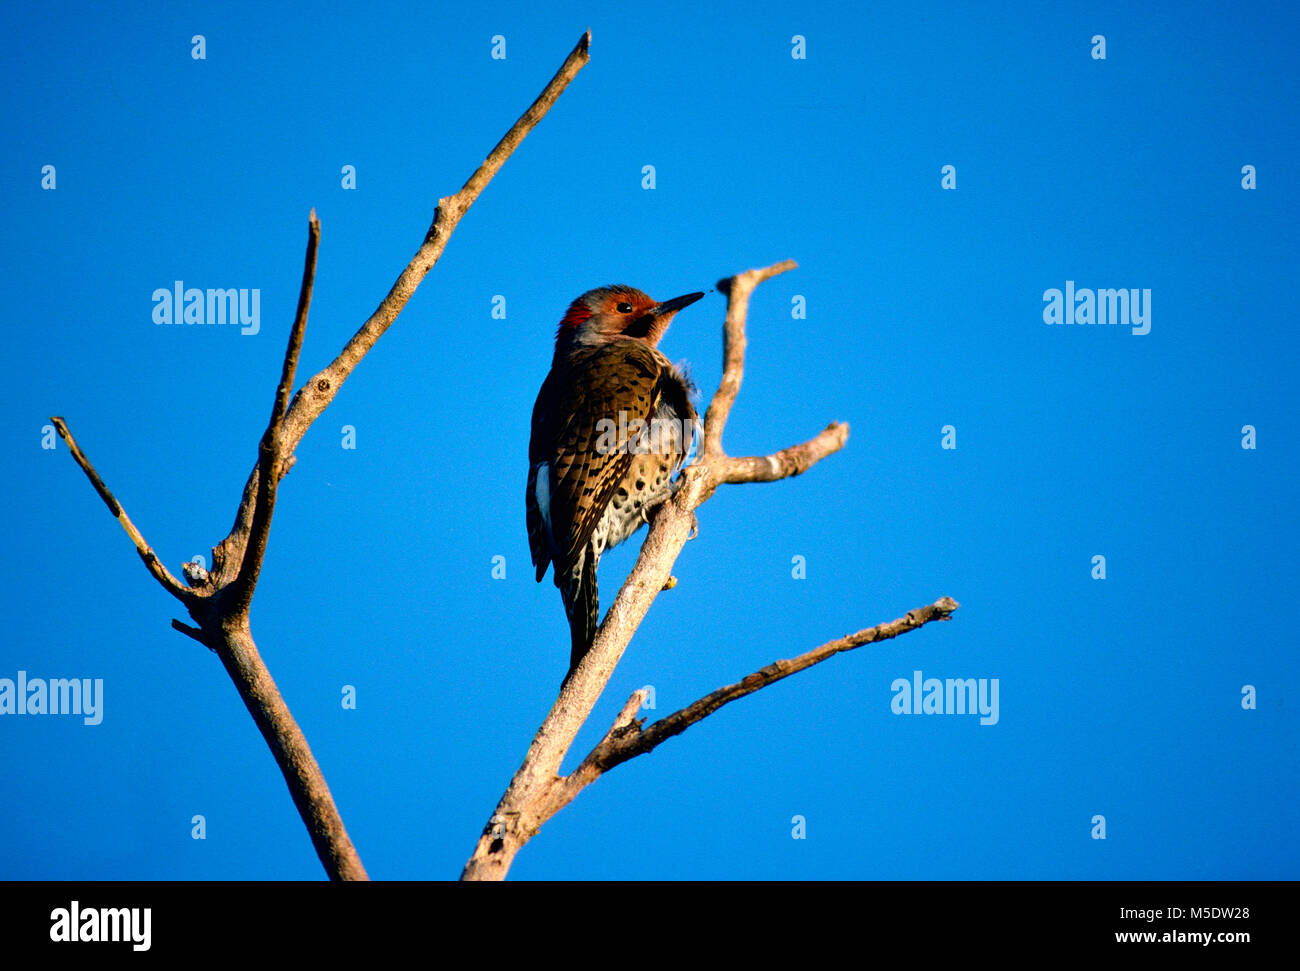 Northern Flicker, Colaptes auratus, Picidae, Flicker, male, Woodpecker, bird, animal, Ding Darling Wildlife Refuge, Florida, USA Stock Photo